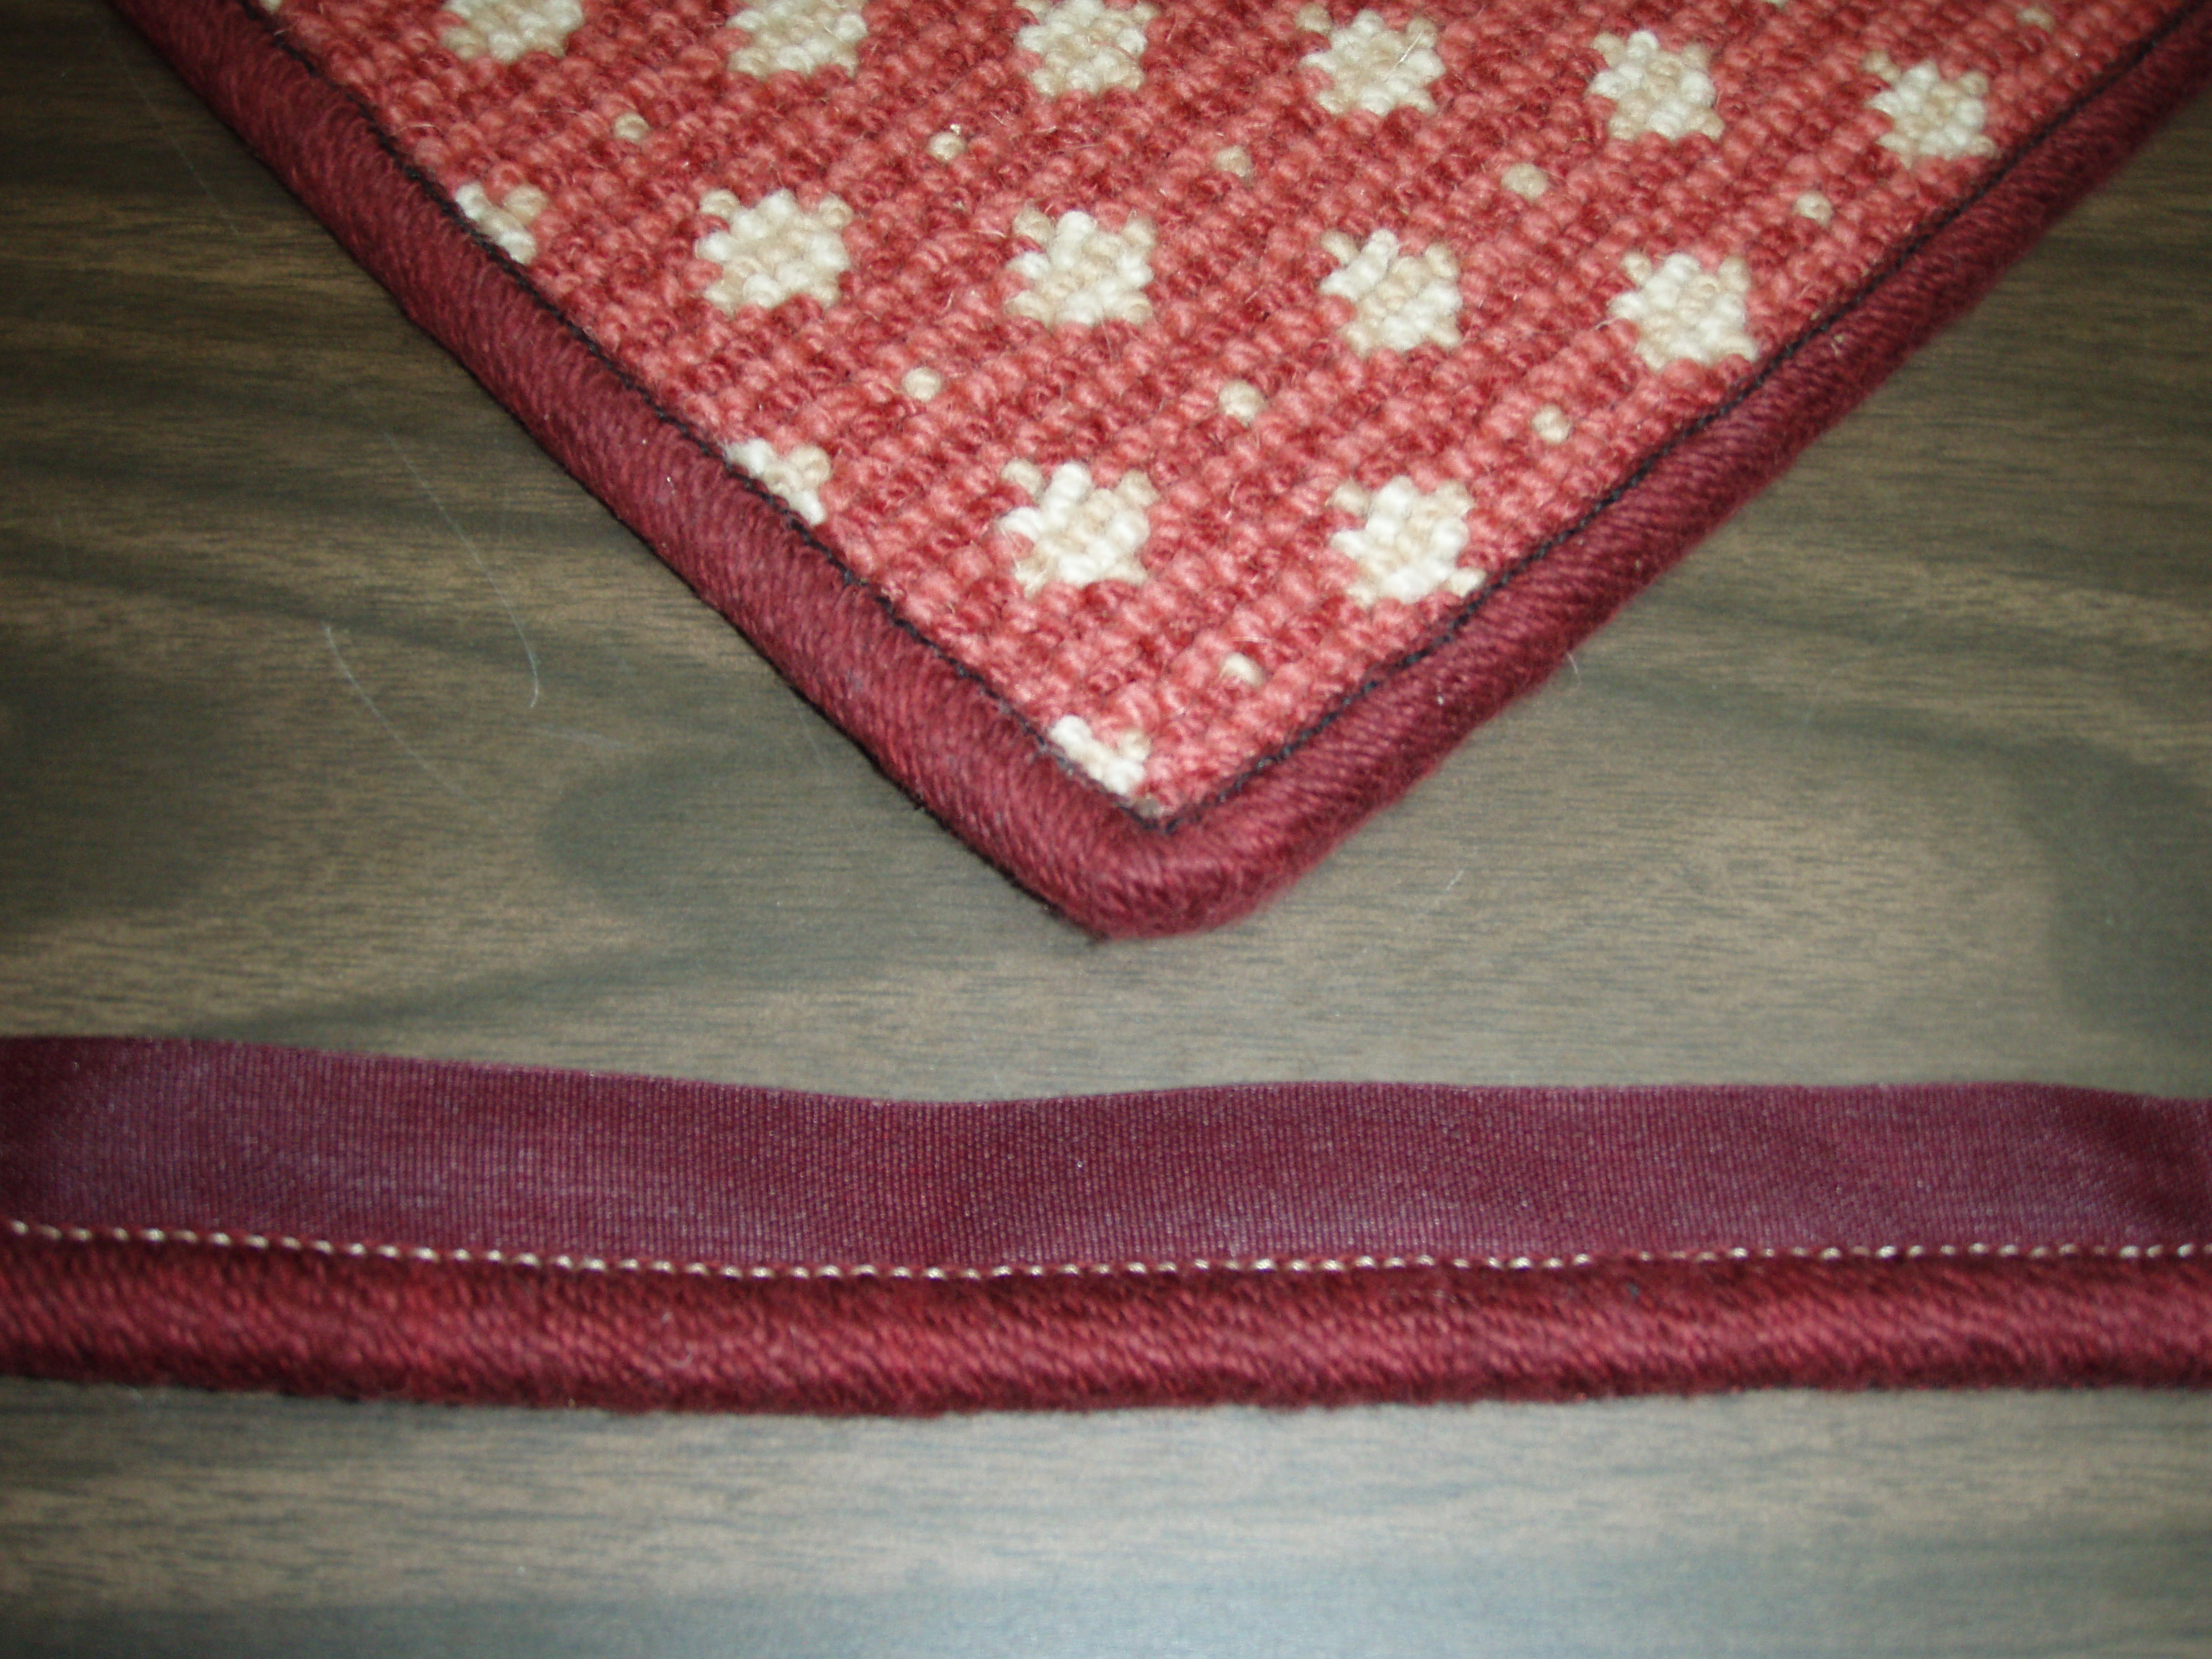 Best ideas about DIY Carpet Binding
. Save or Pin Instabind DIY Cotton Serge Style Carpet Binding Bond Now.